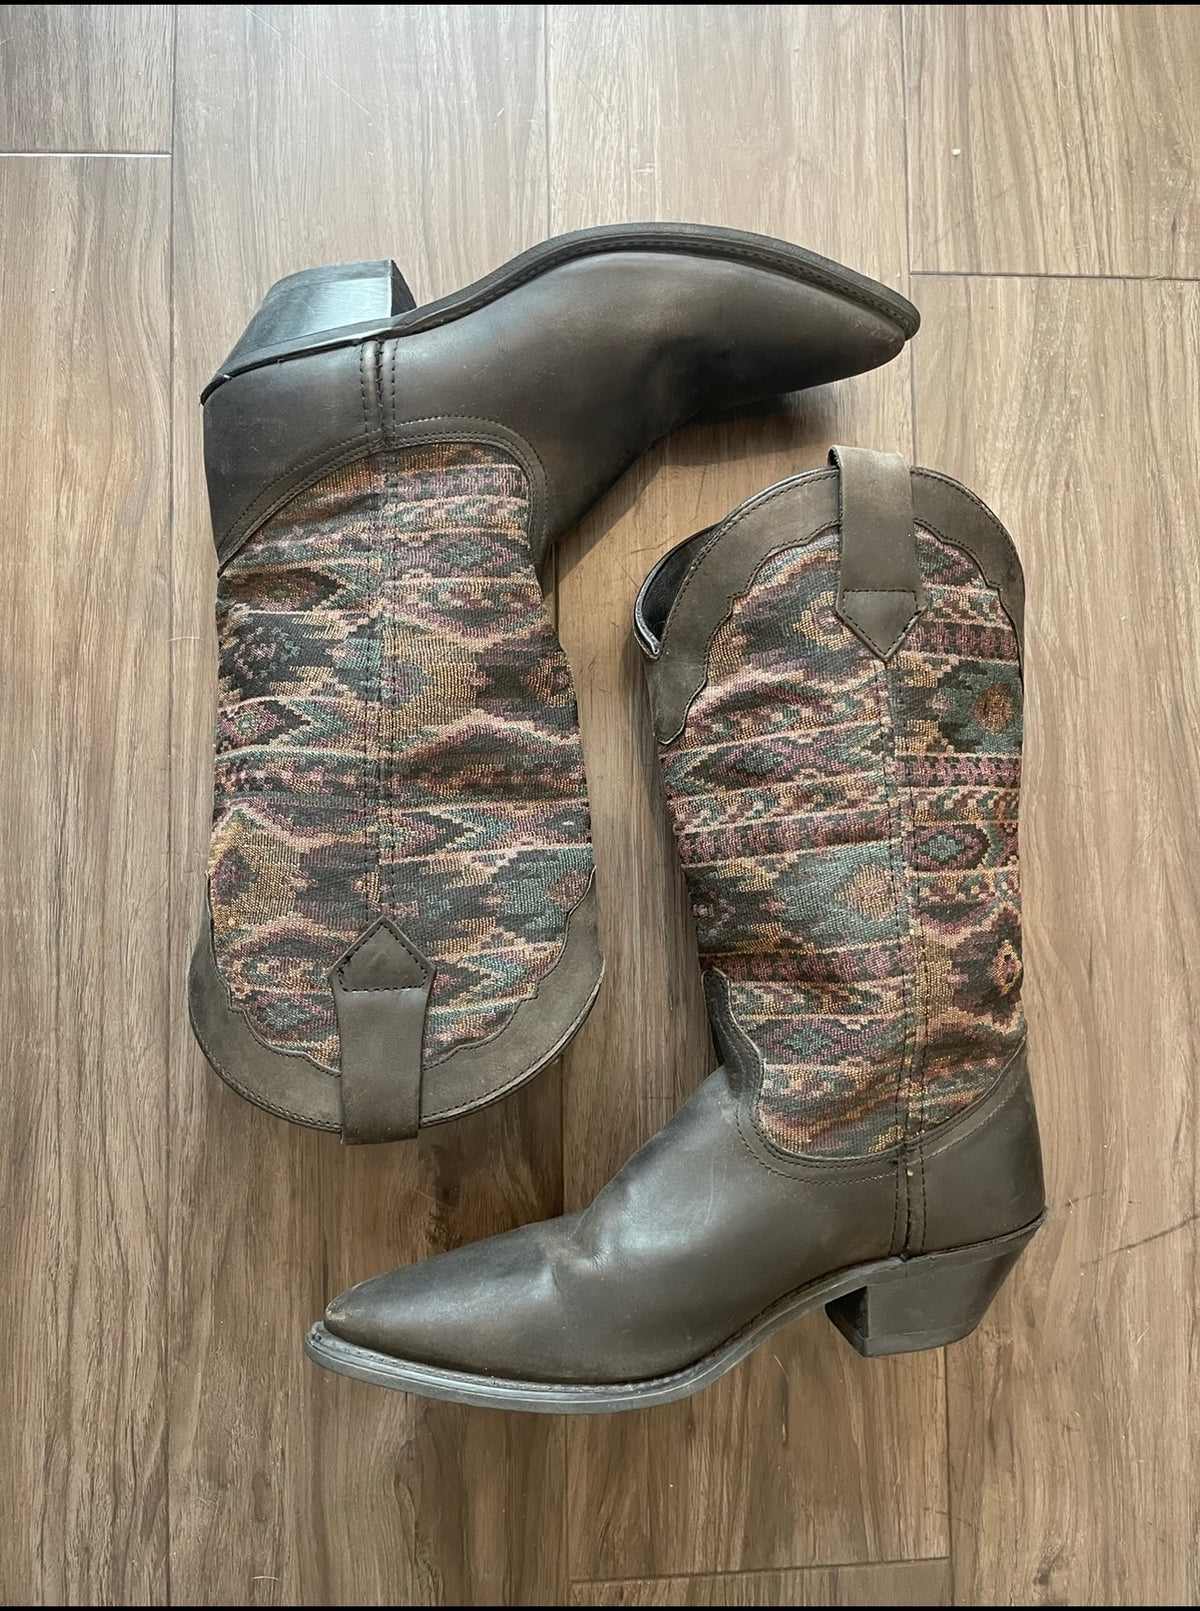 Vintage Black & Tapestry Cowboy Boots